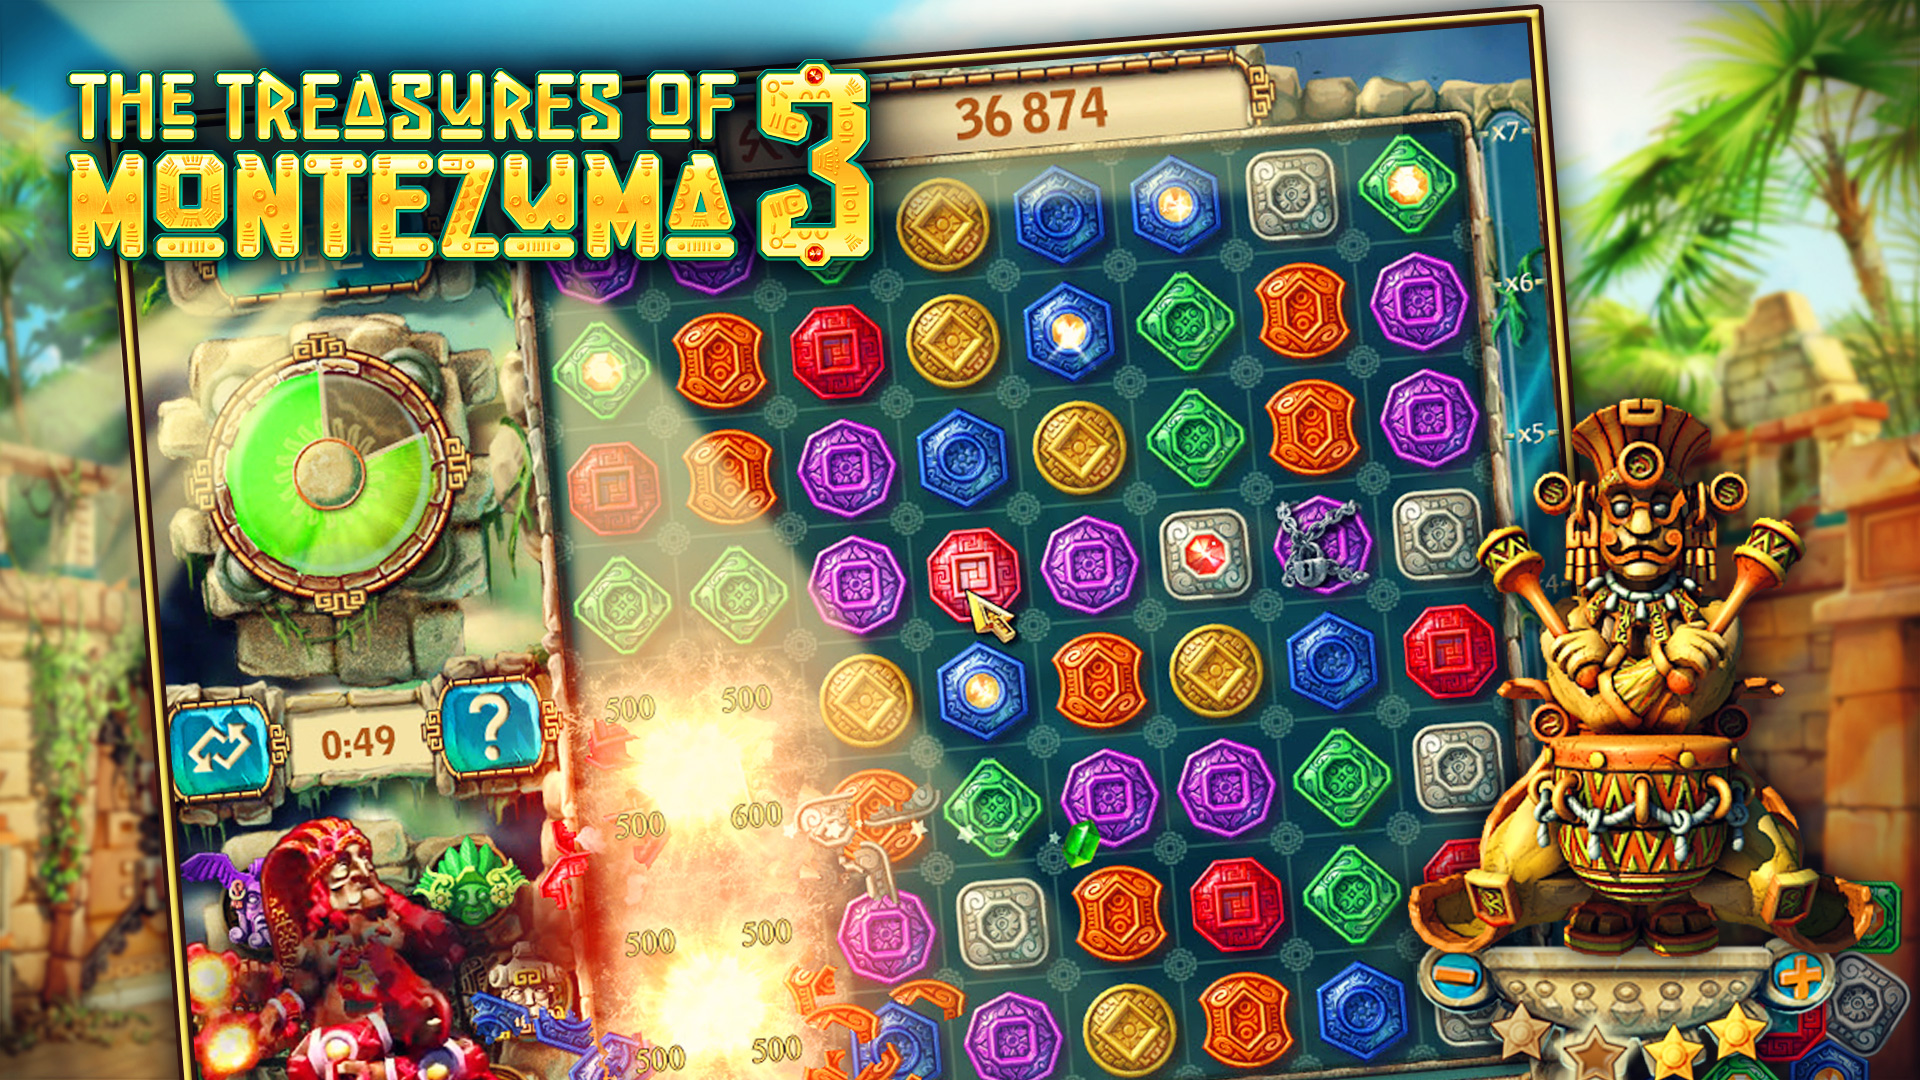 The Treasures of Montezuma 3 download the new